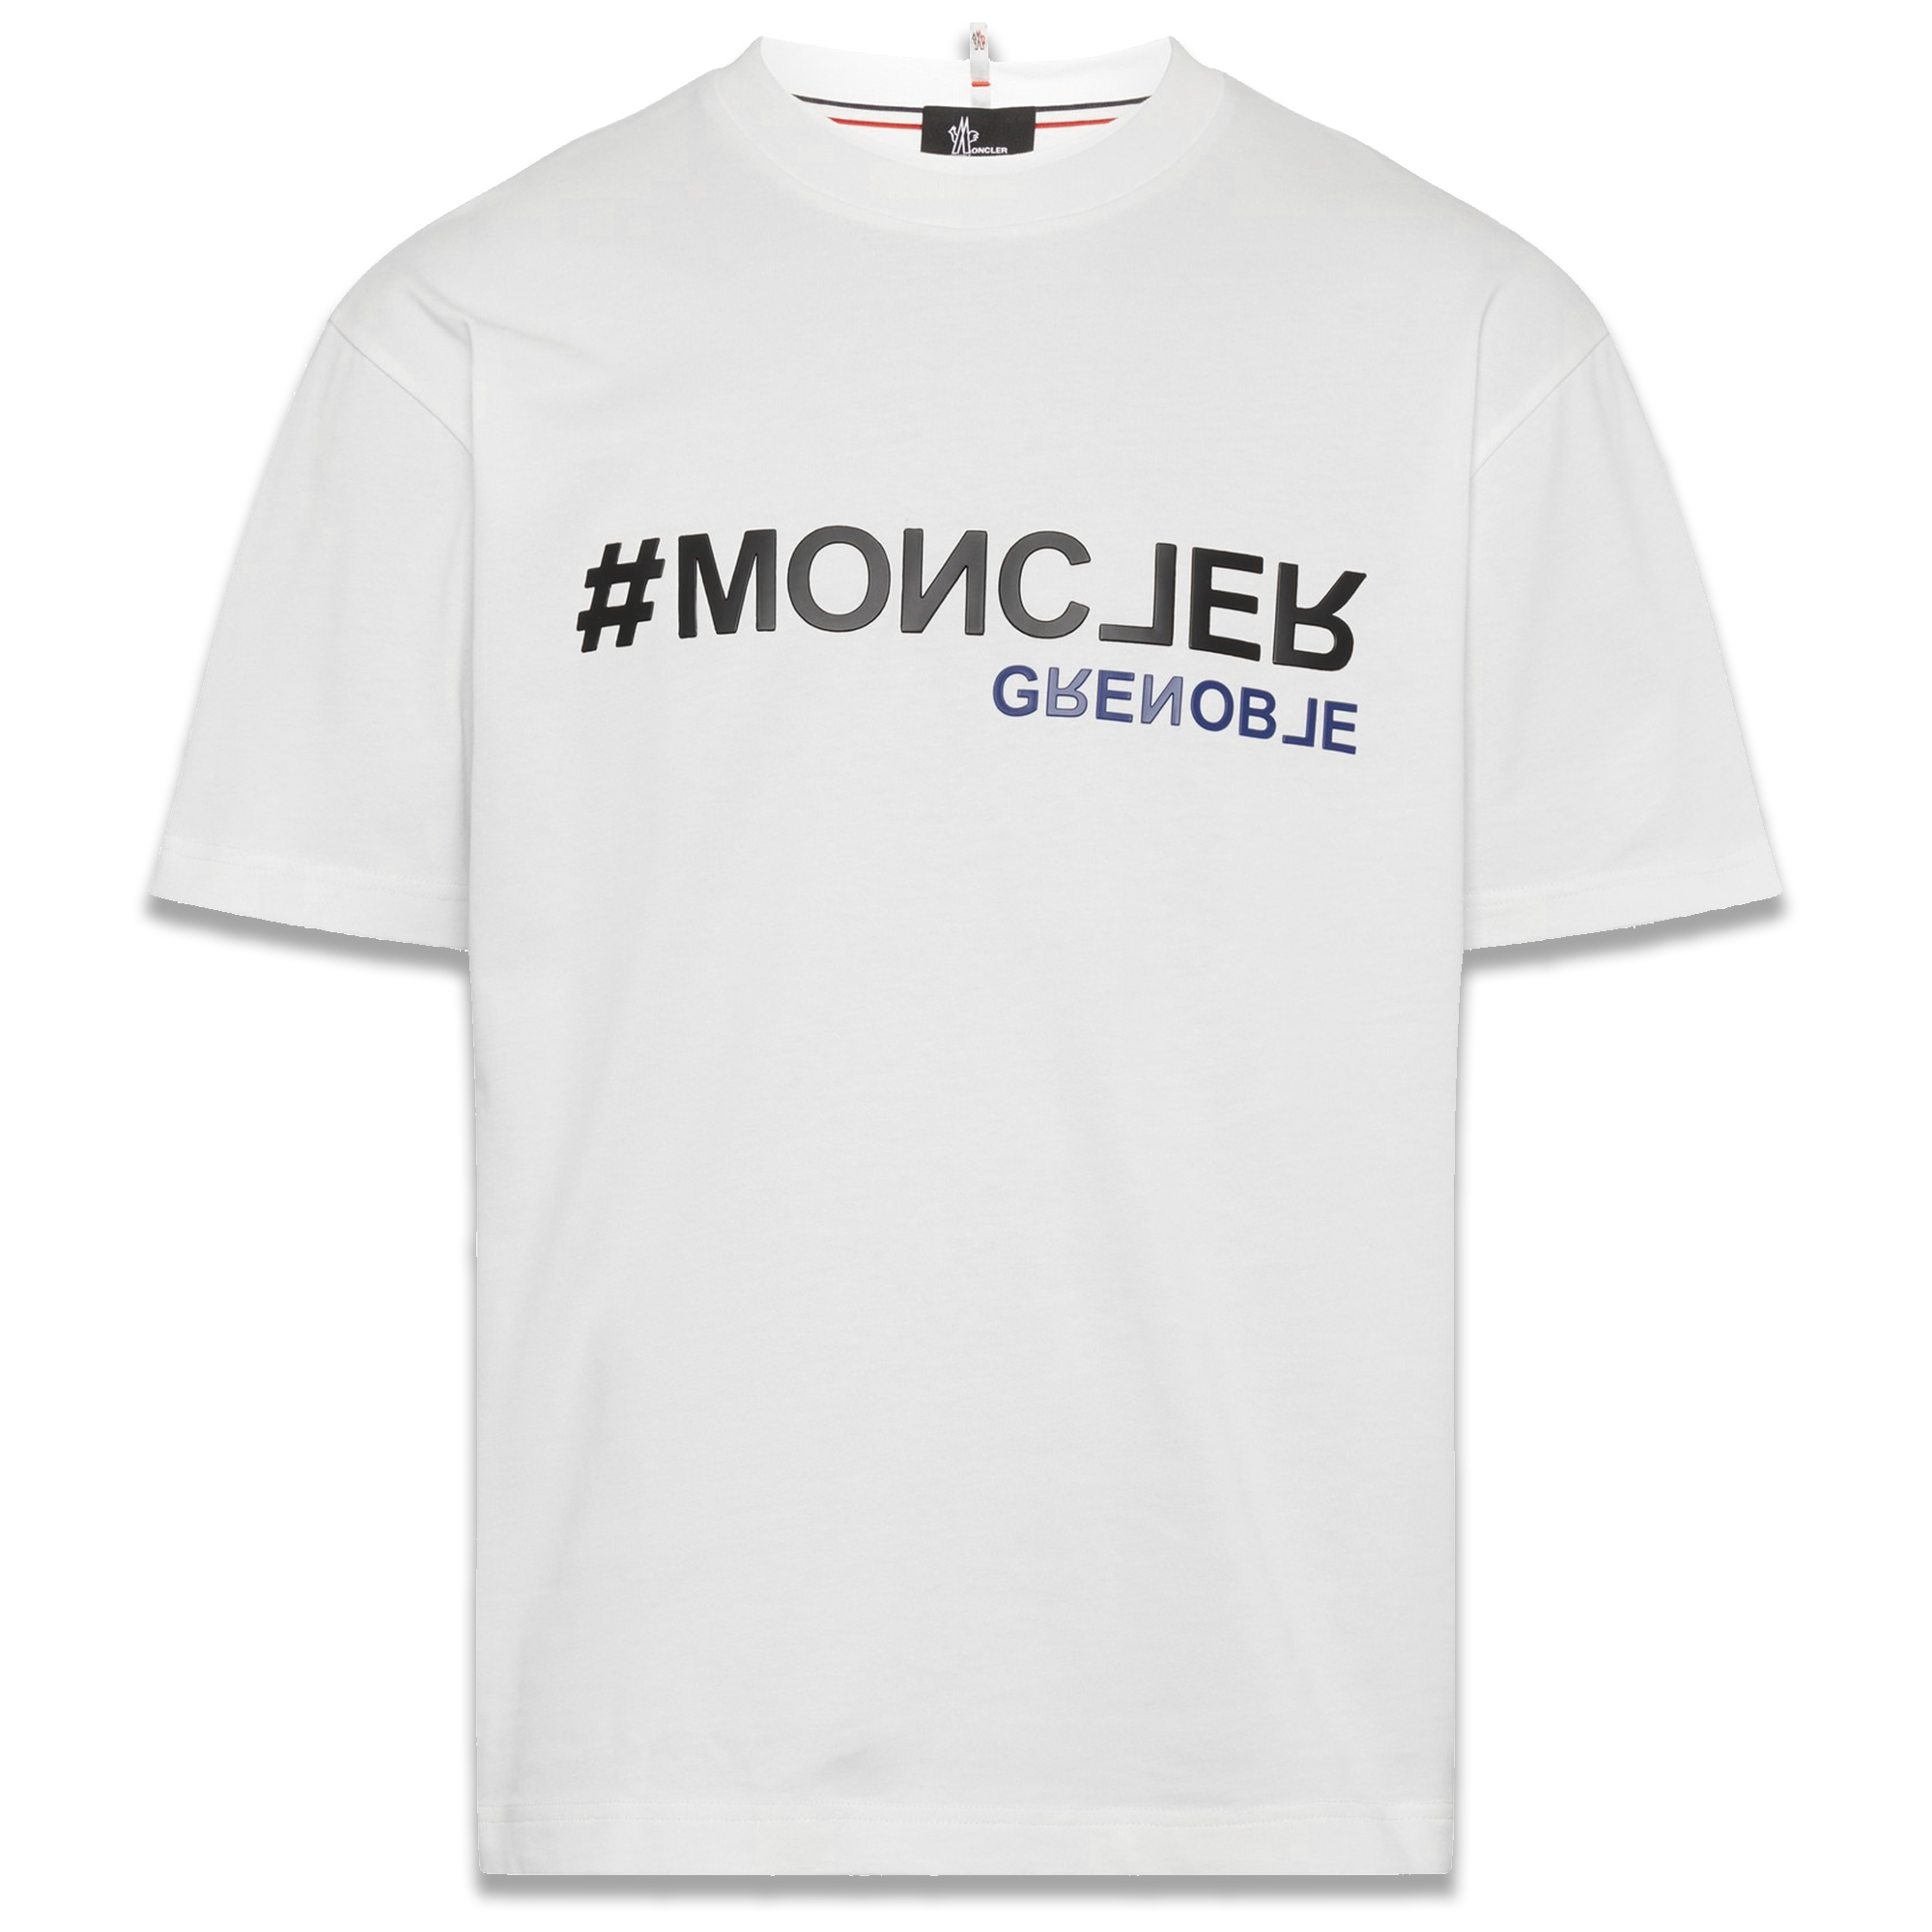 Moncler Logo Print T-Shirt White - Fairchild Fashion 